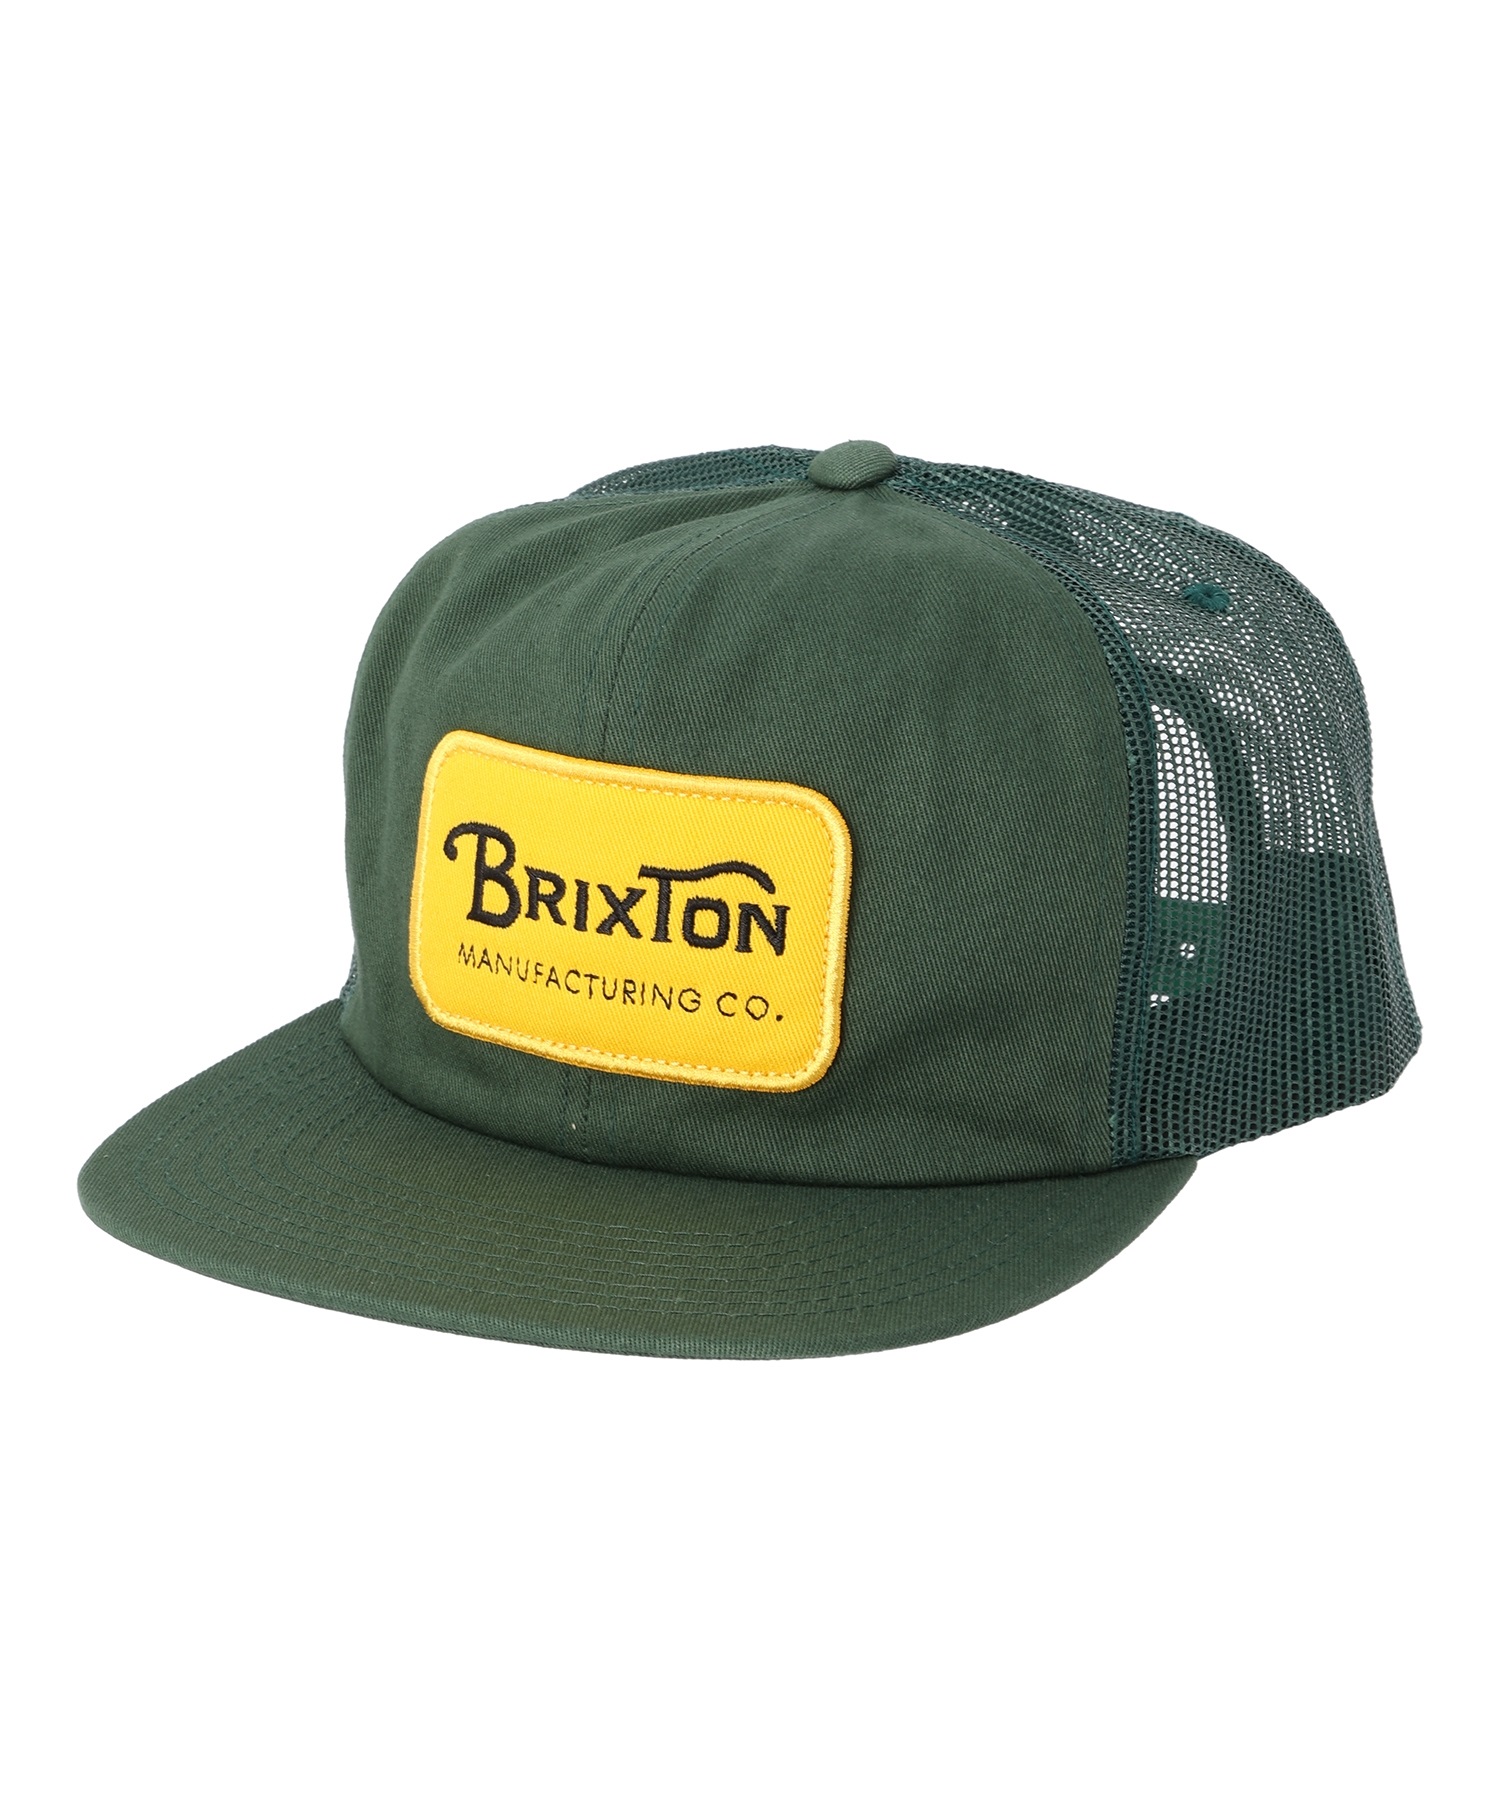 BRIXTON/ブリクストン GRADE HP TRUCKER HAT 11645 キャップ(BLOGW-F)